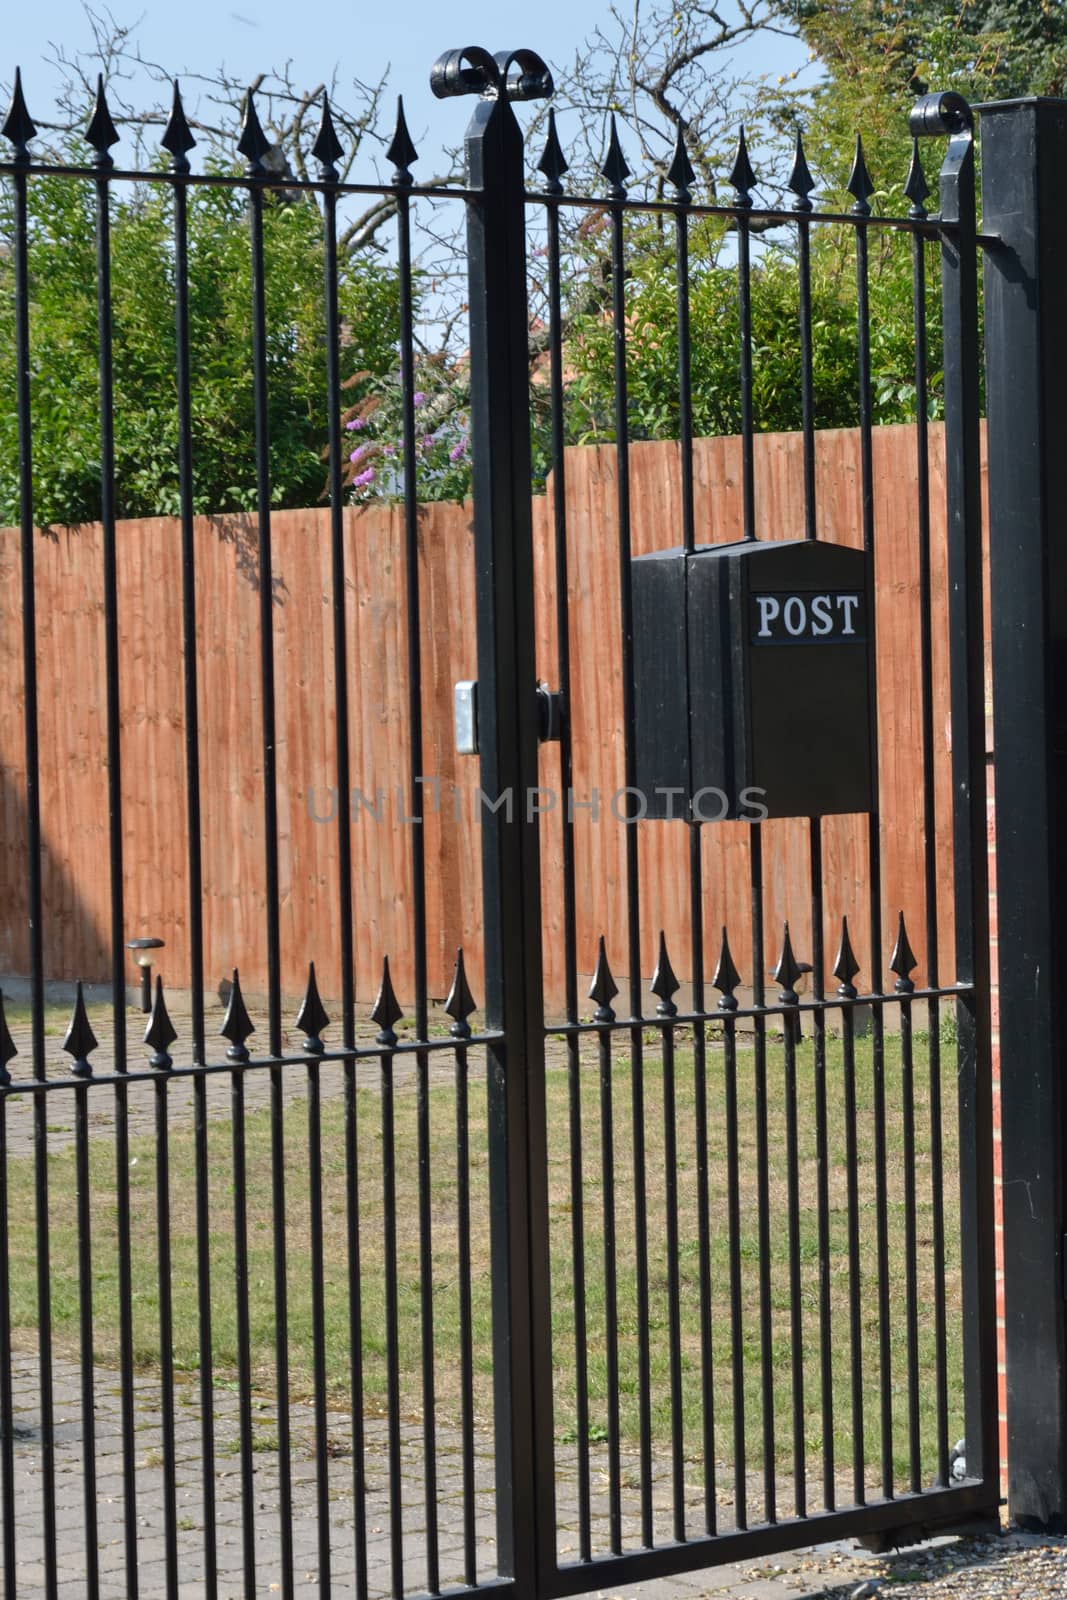 Post Box on fence